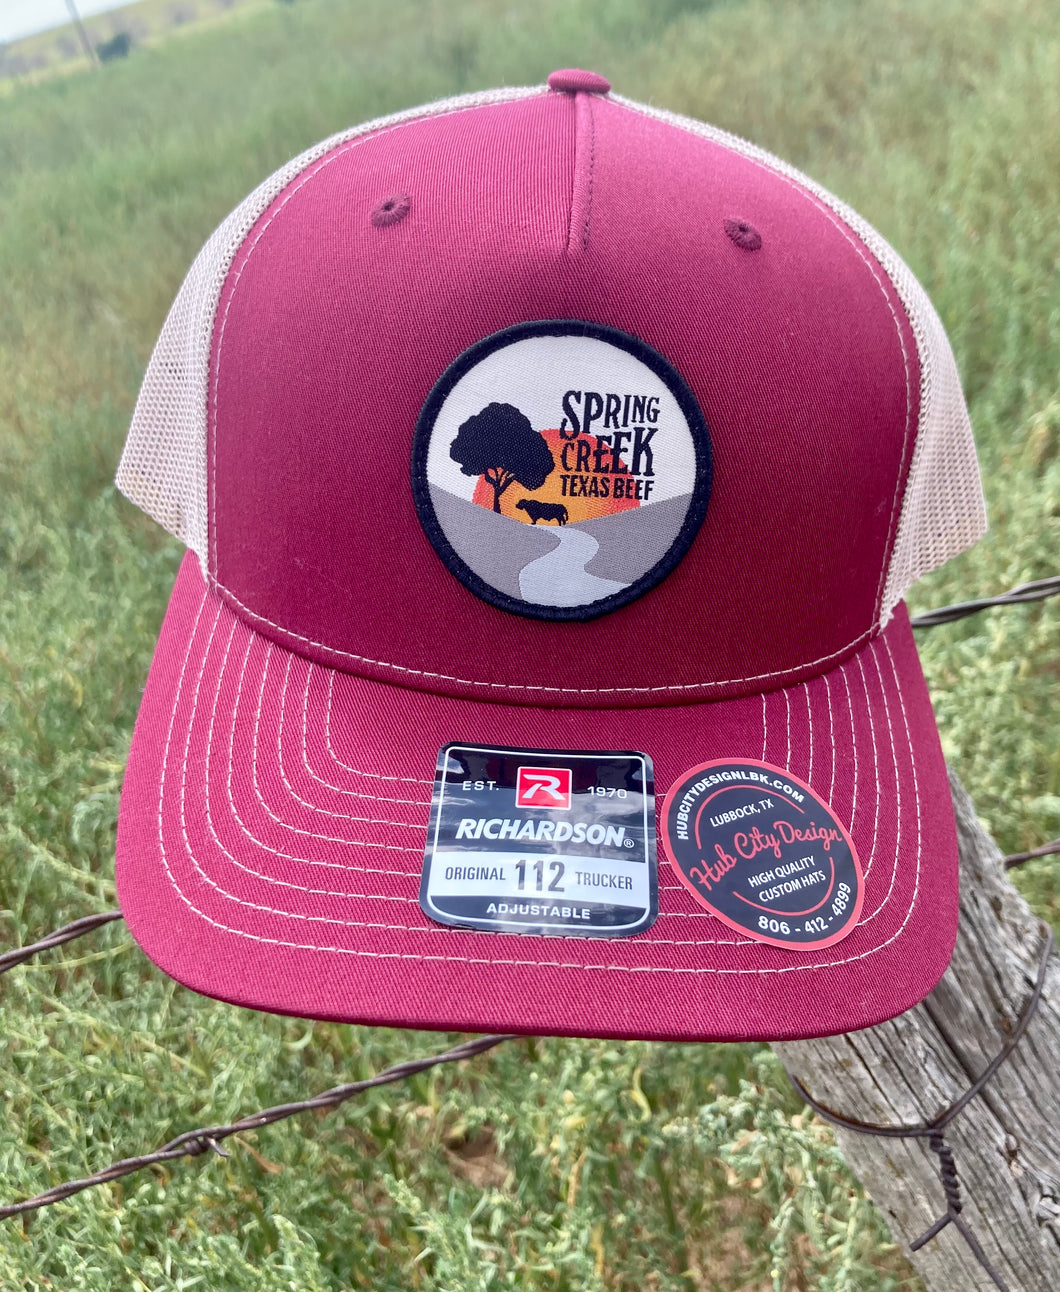 Spring Creek Texas Beef Maroon/Tan Trucker Cap with Patch